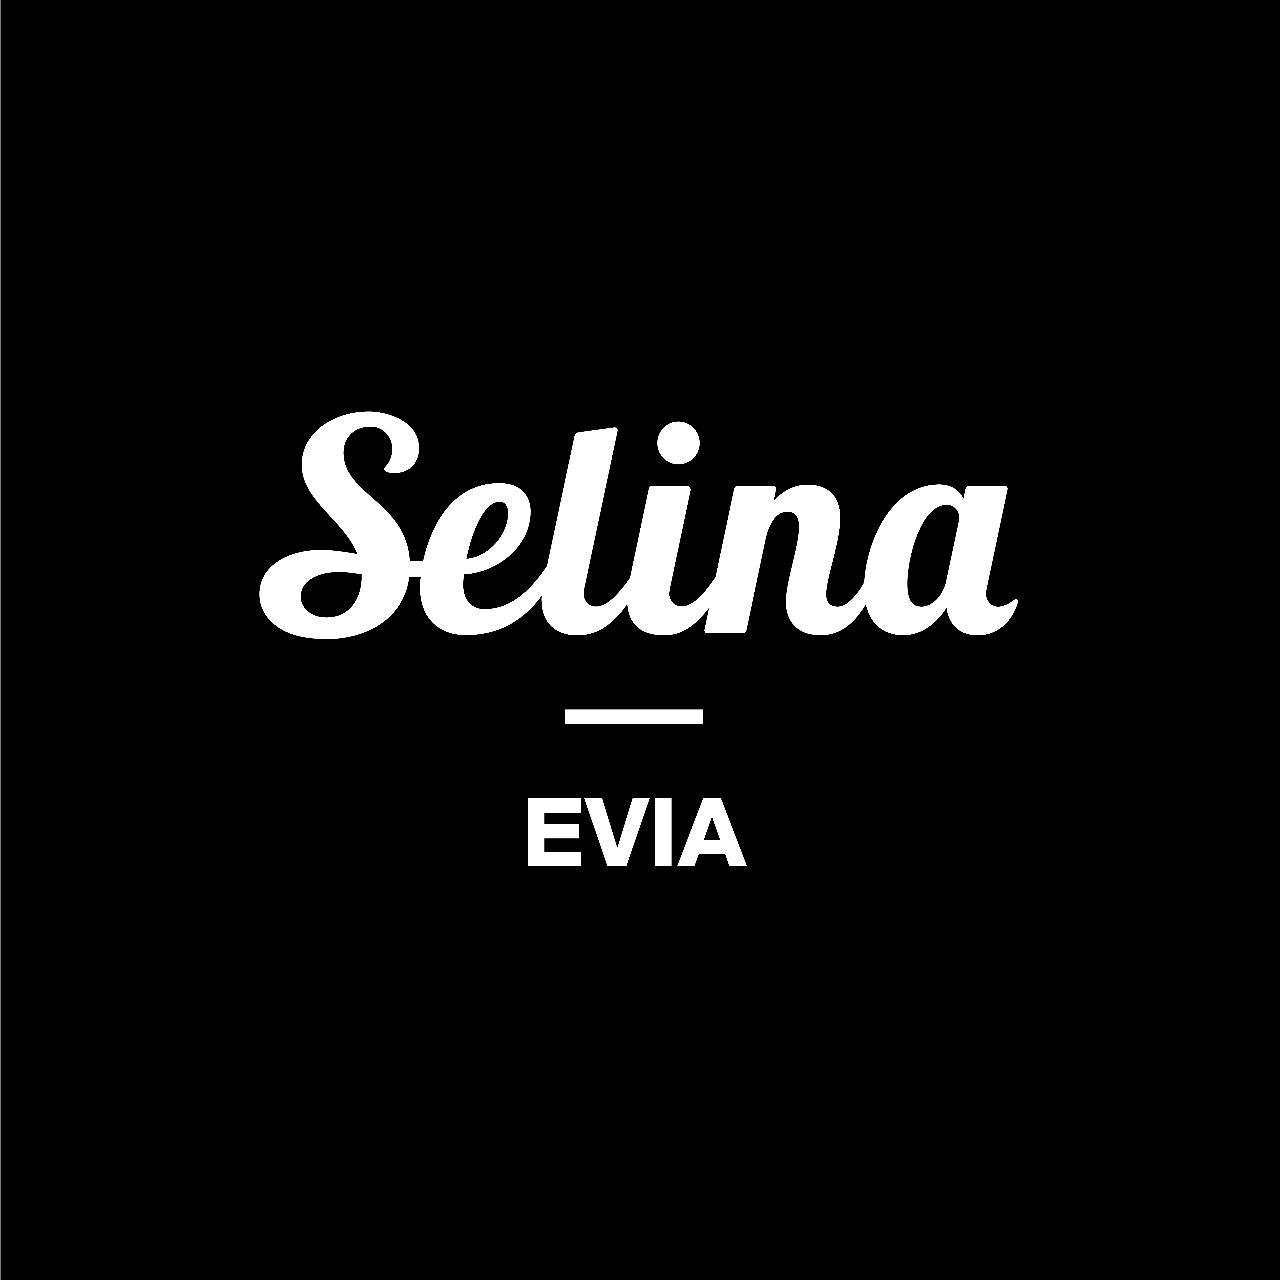 Selina Evia Logo black